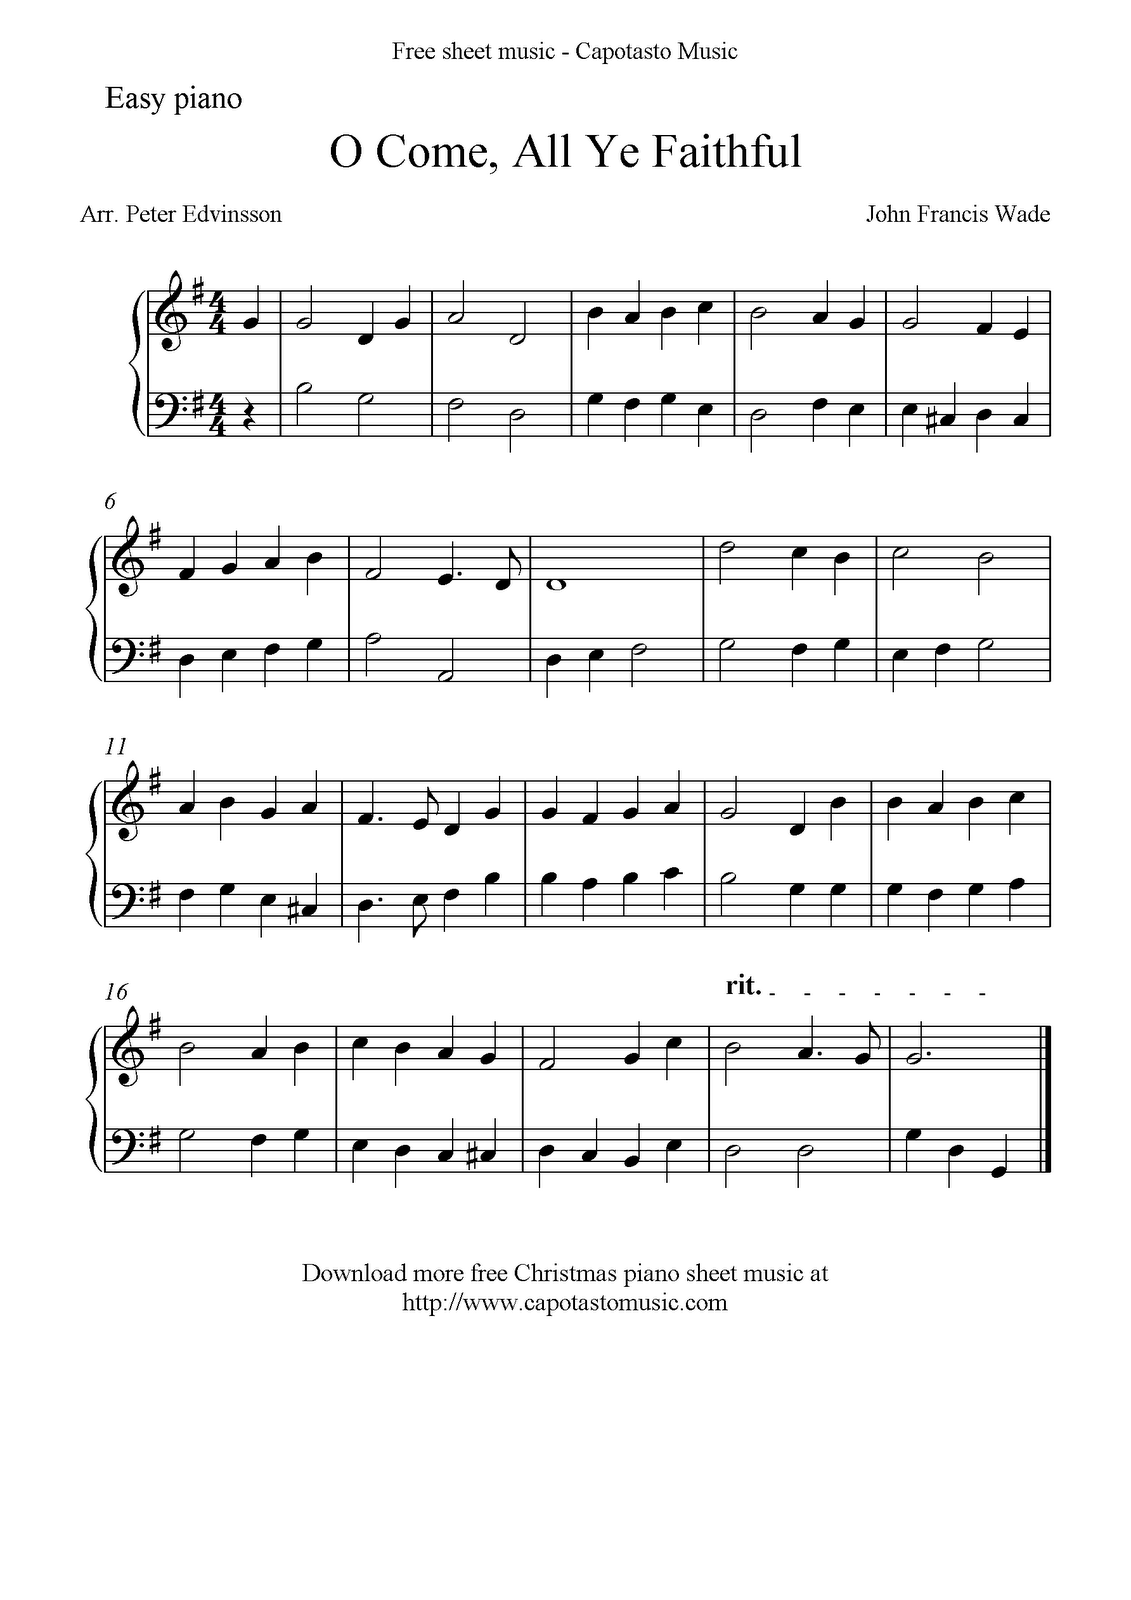 Easy Sheet Music For Beginners Free Easy Christmas Piano Sheet Music O Come All Ye Faithful - Free Christmas Piano Sheet Music For Beginners Printable